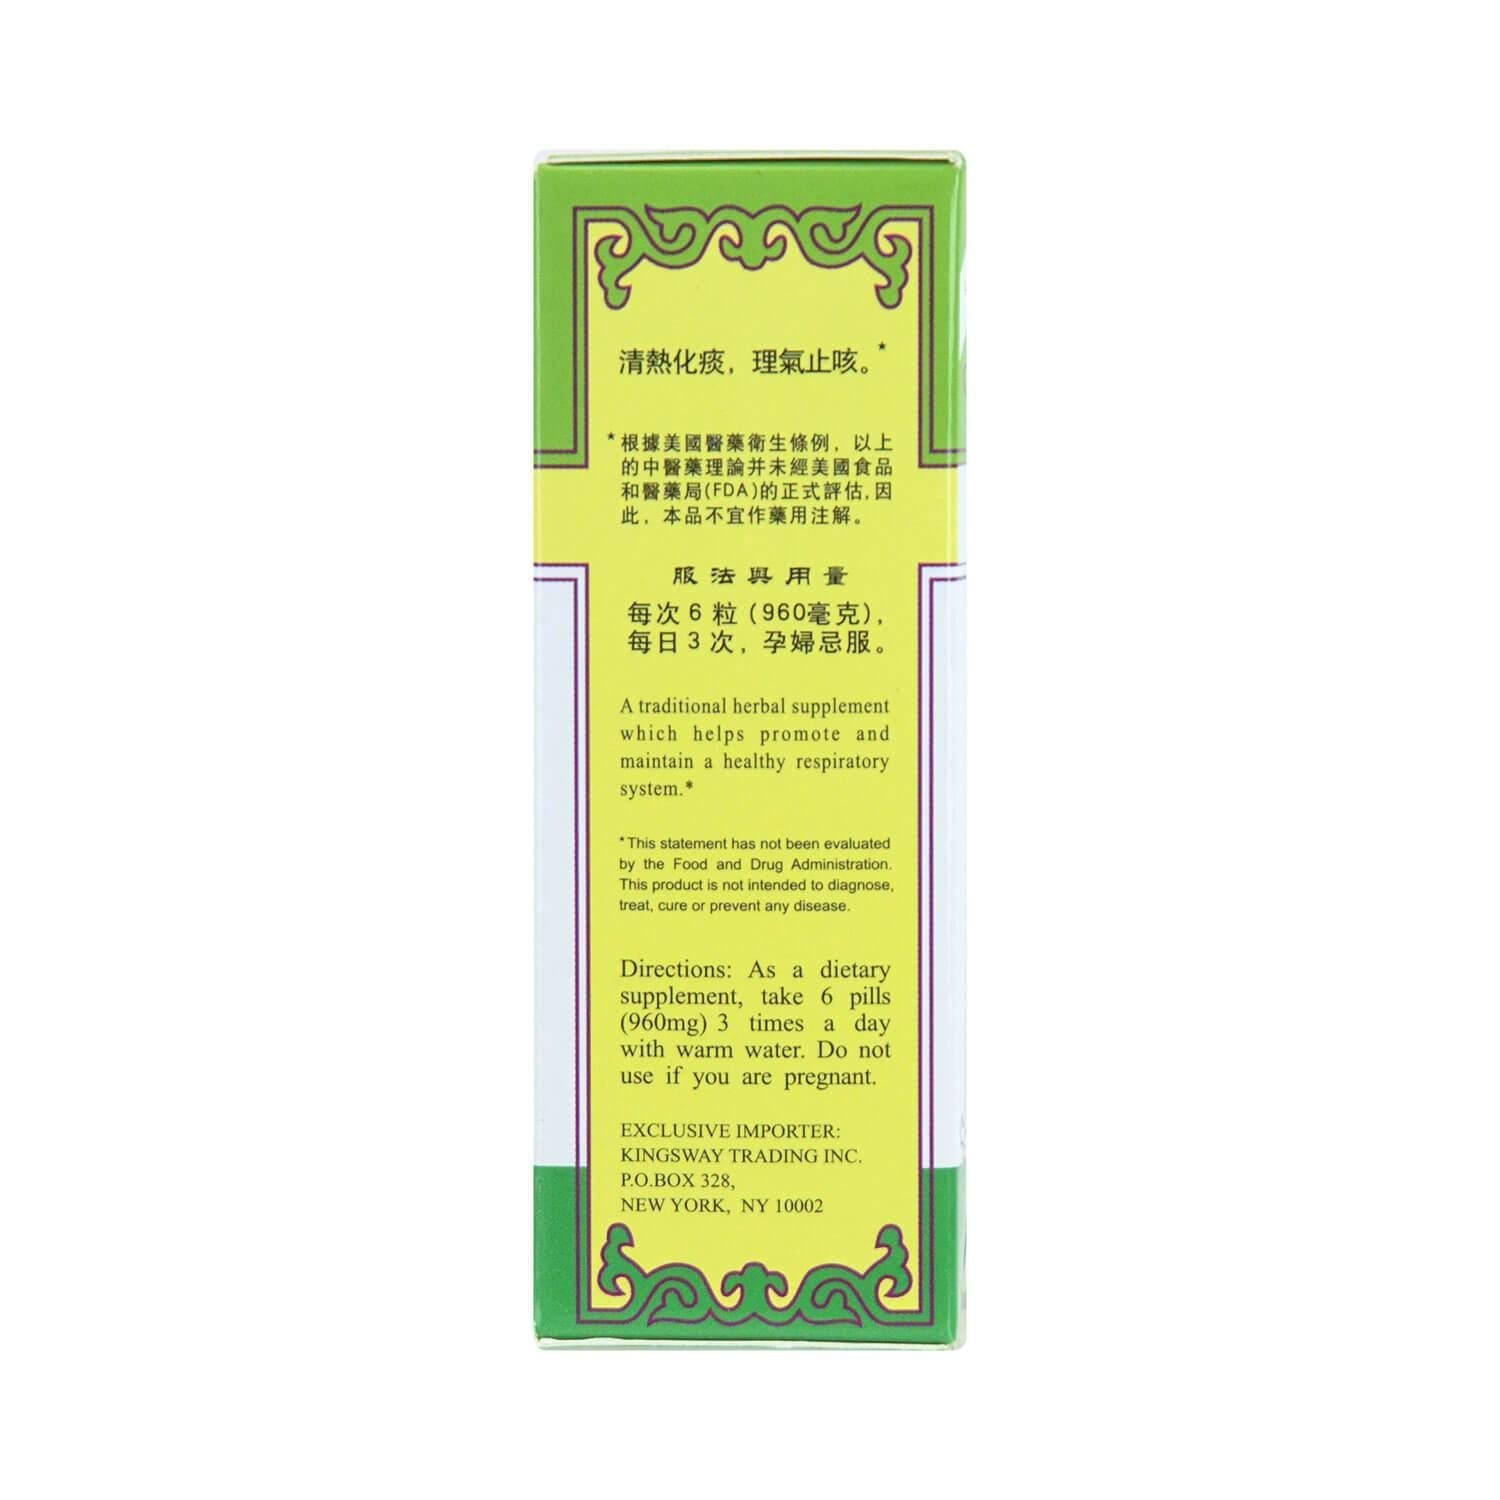 Respiryn Extract, Qing Qi Hua Tan Wan (200 Pills) - Buy at New Green Nutrition